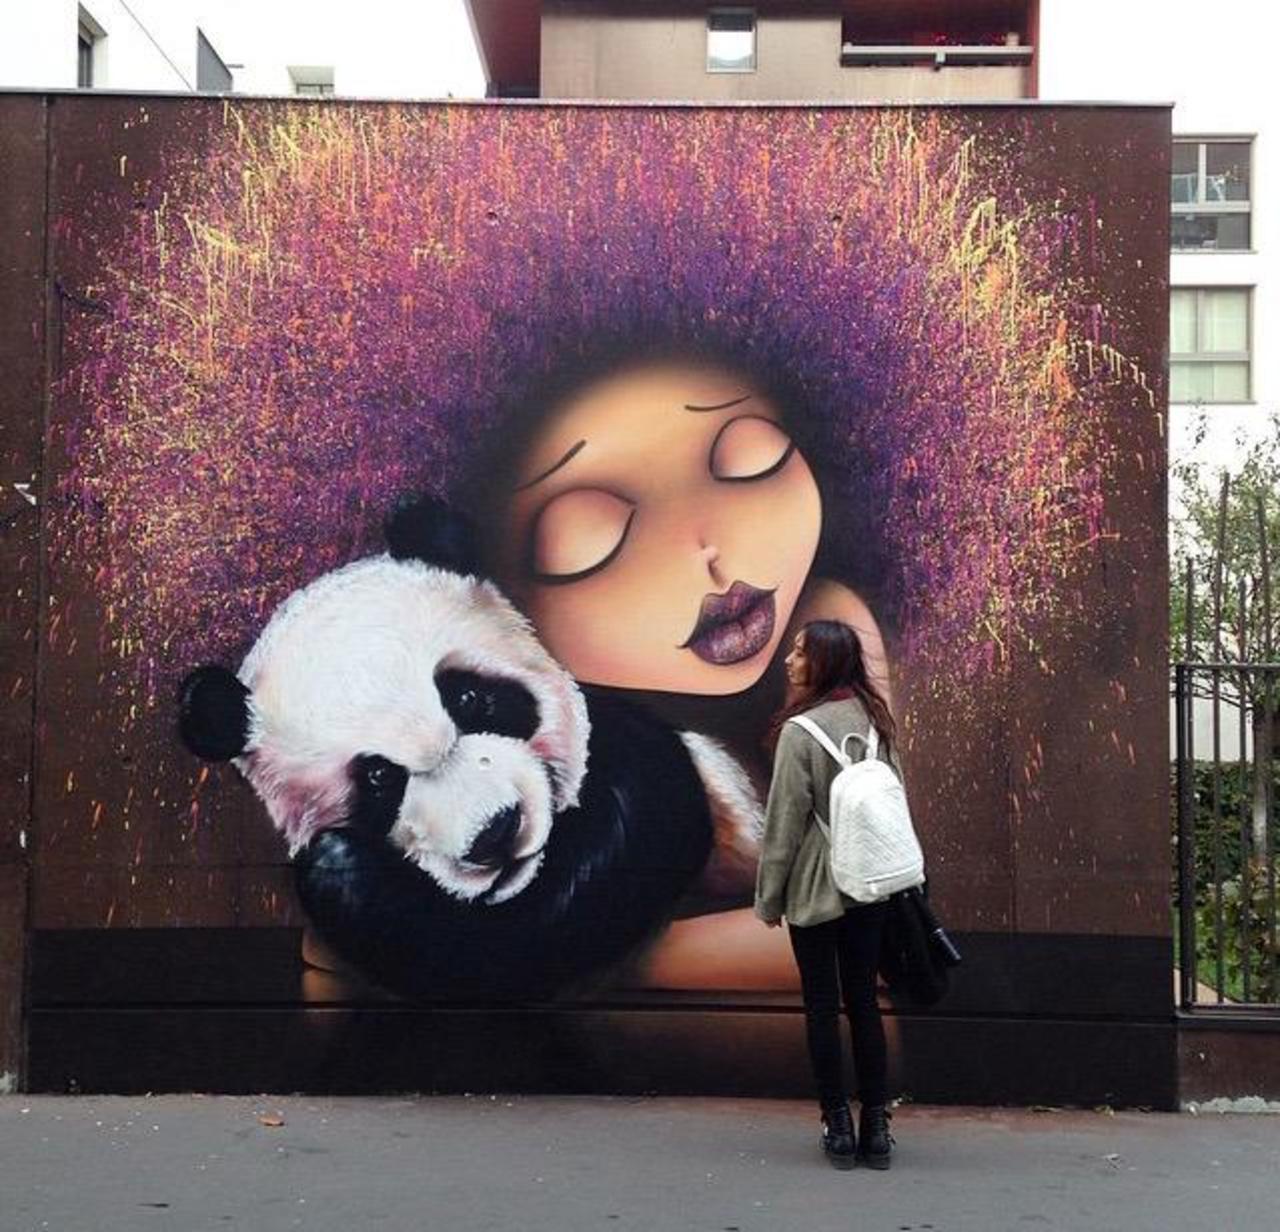 Street Art by VinieGraffiti in Paris 

#art #graffiti #mural #streetart http://t.co/HSqz1zGiIJ